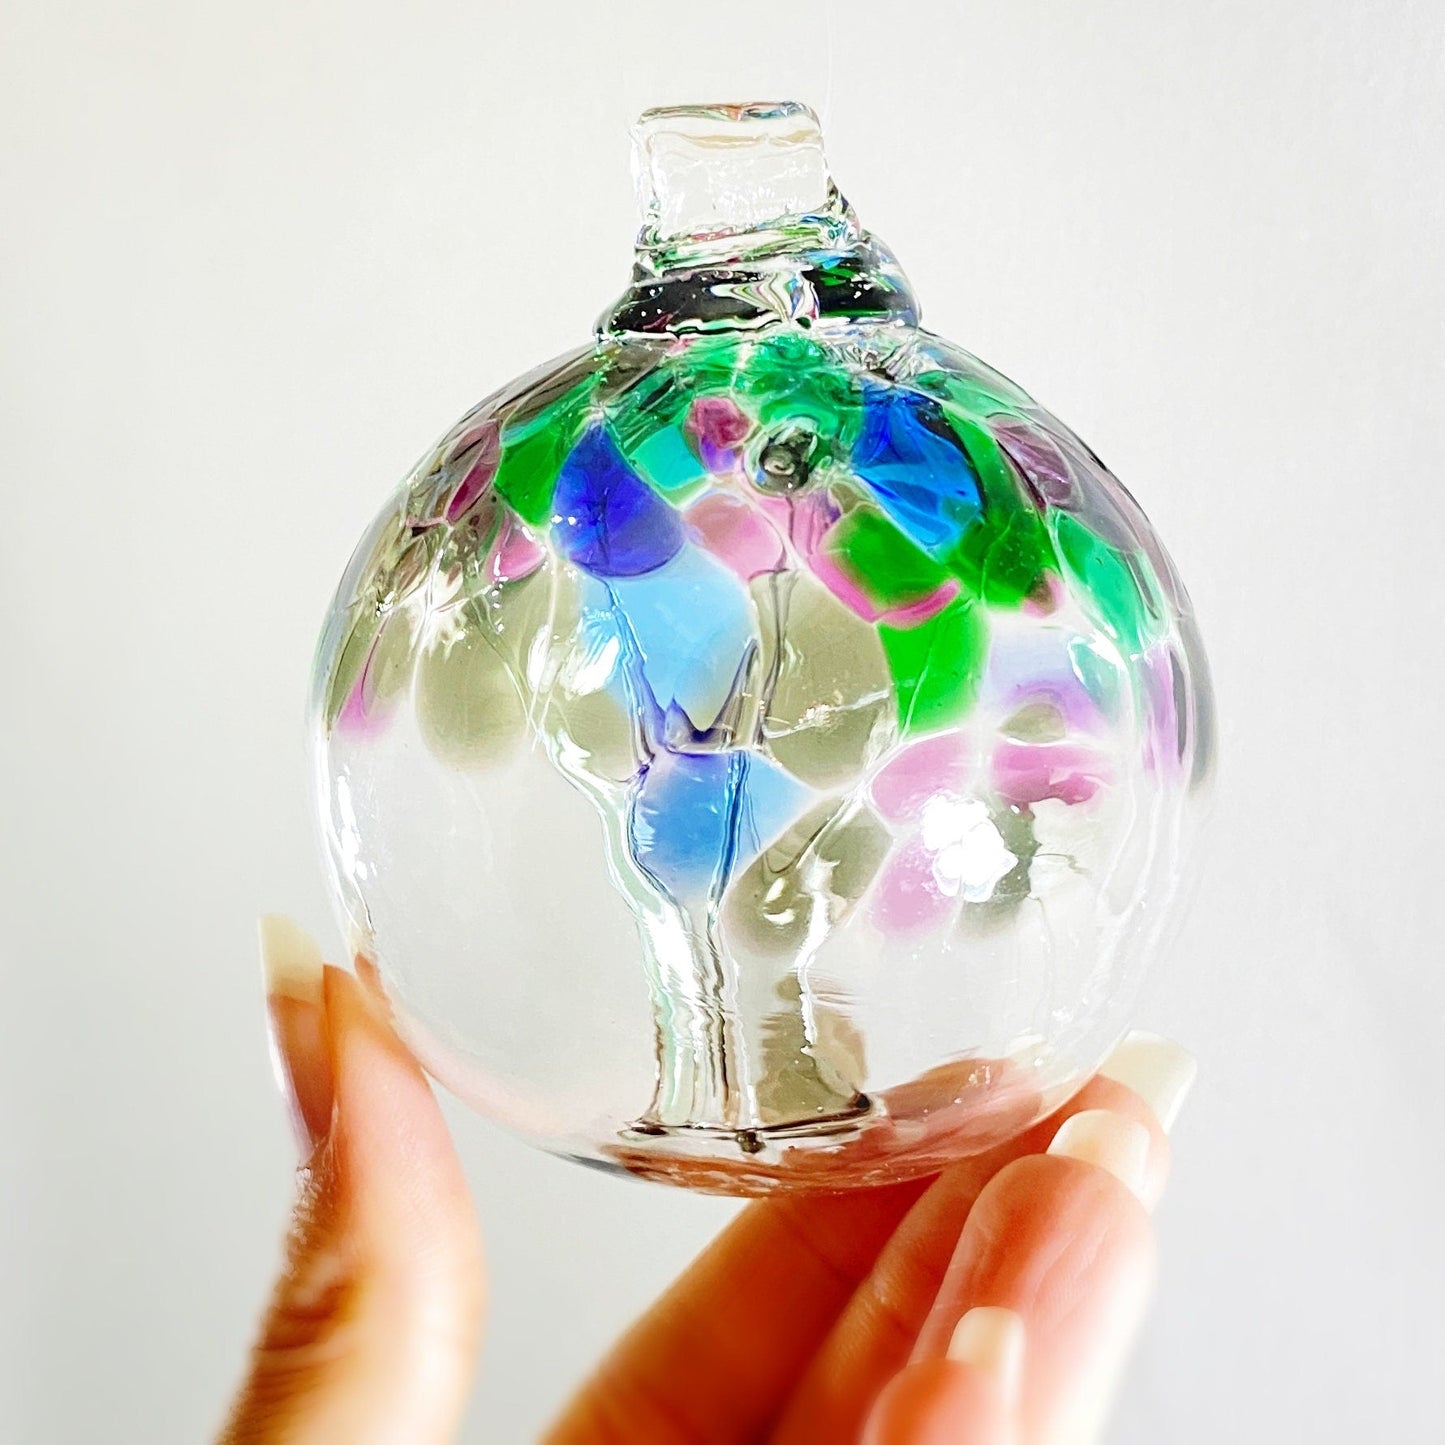 Handmade Glass Art 2” Globe Ornament - Tree of Strength